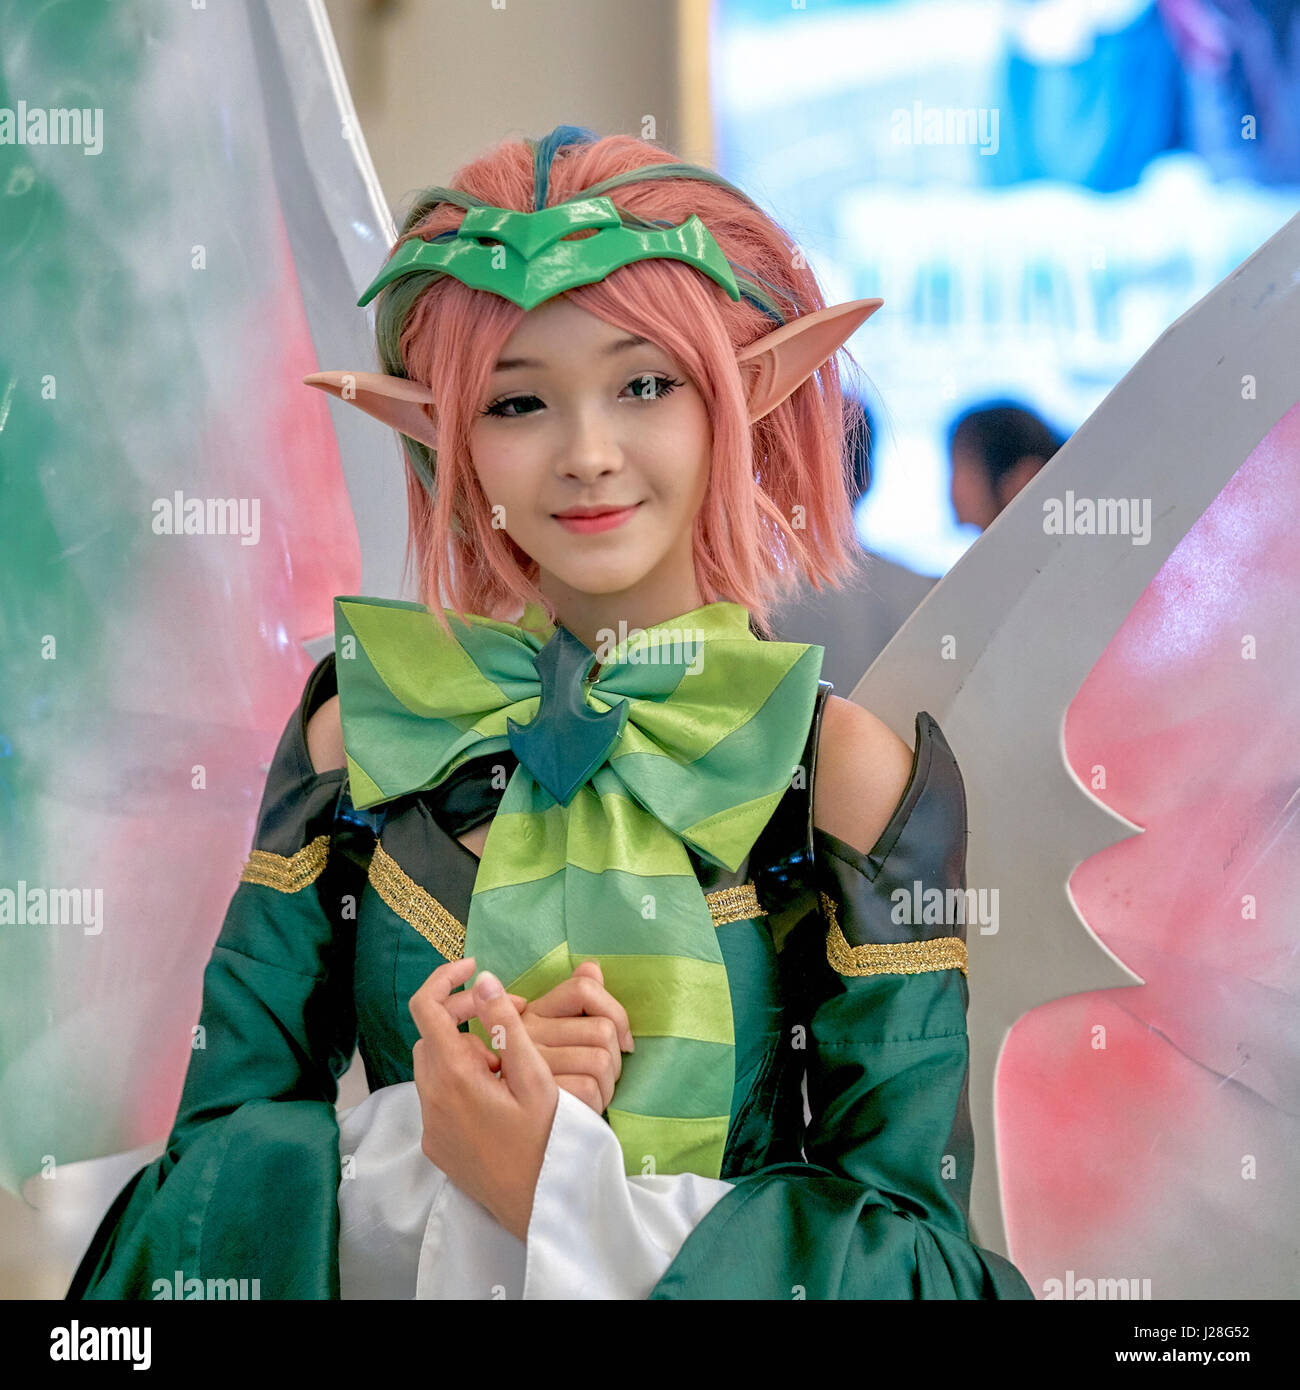 Comic Con woman Cosplay girl dressed as an elf, Bangkok, Thailand, 2017 Stock Photo